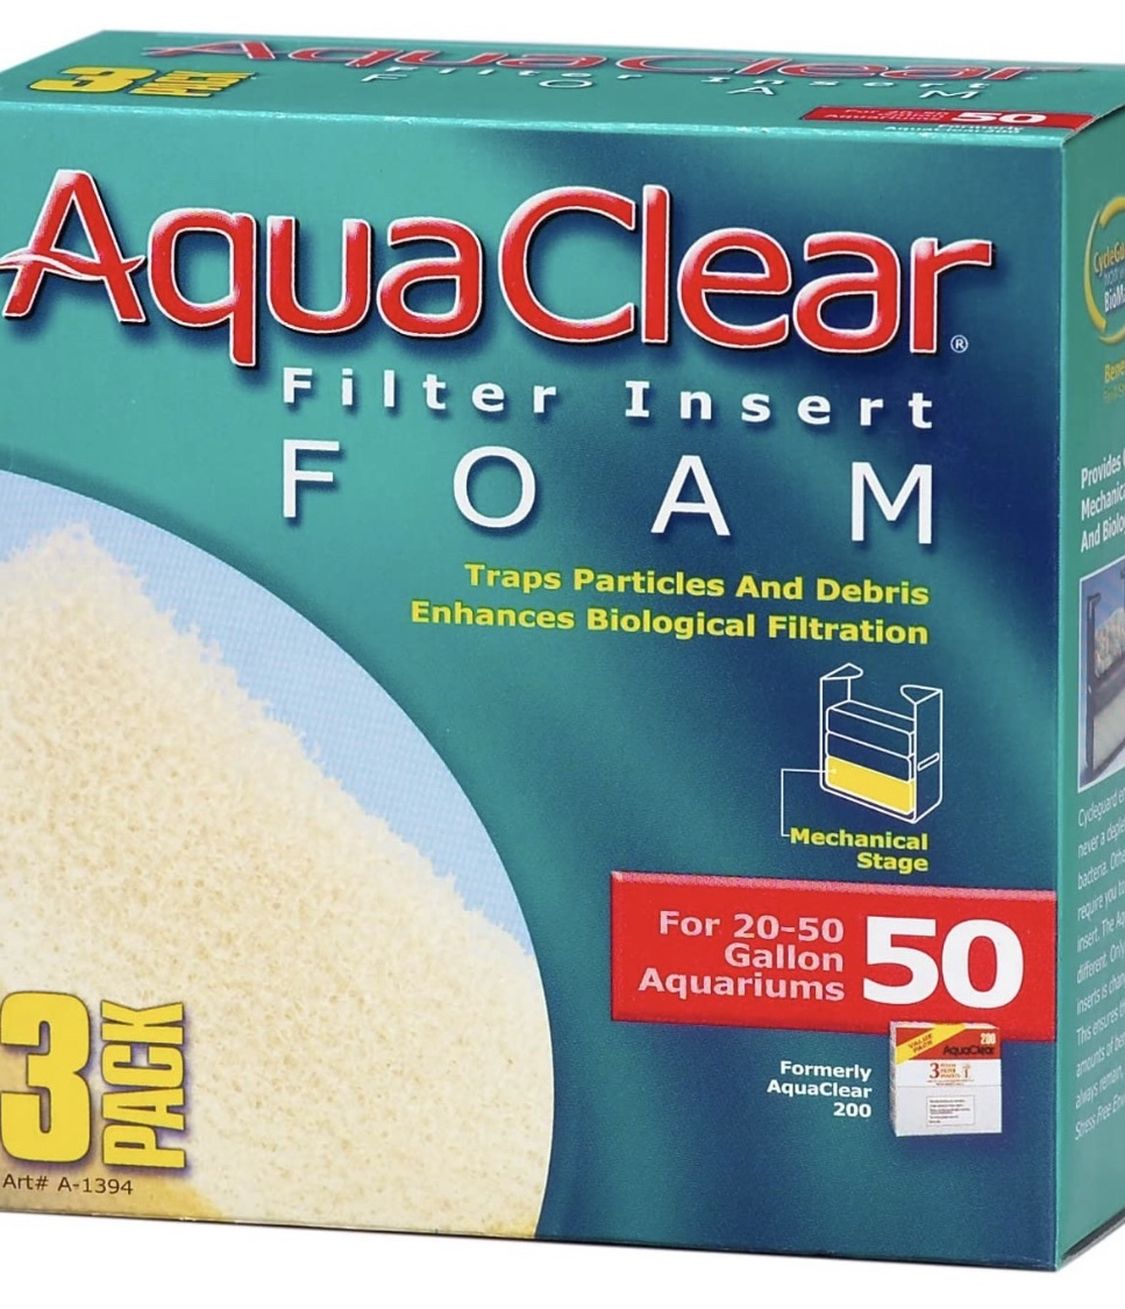 Aquaclear Filter Foam (3 left in stock)